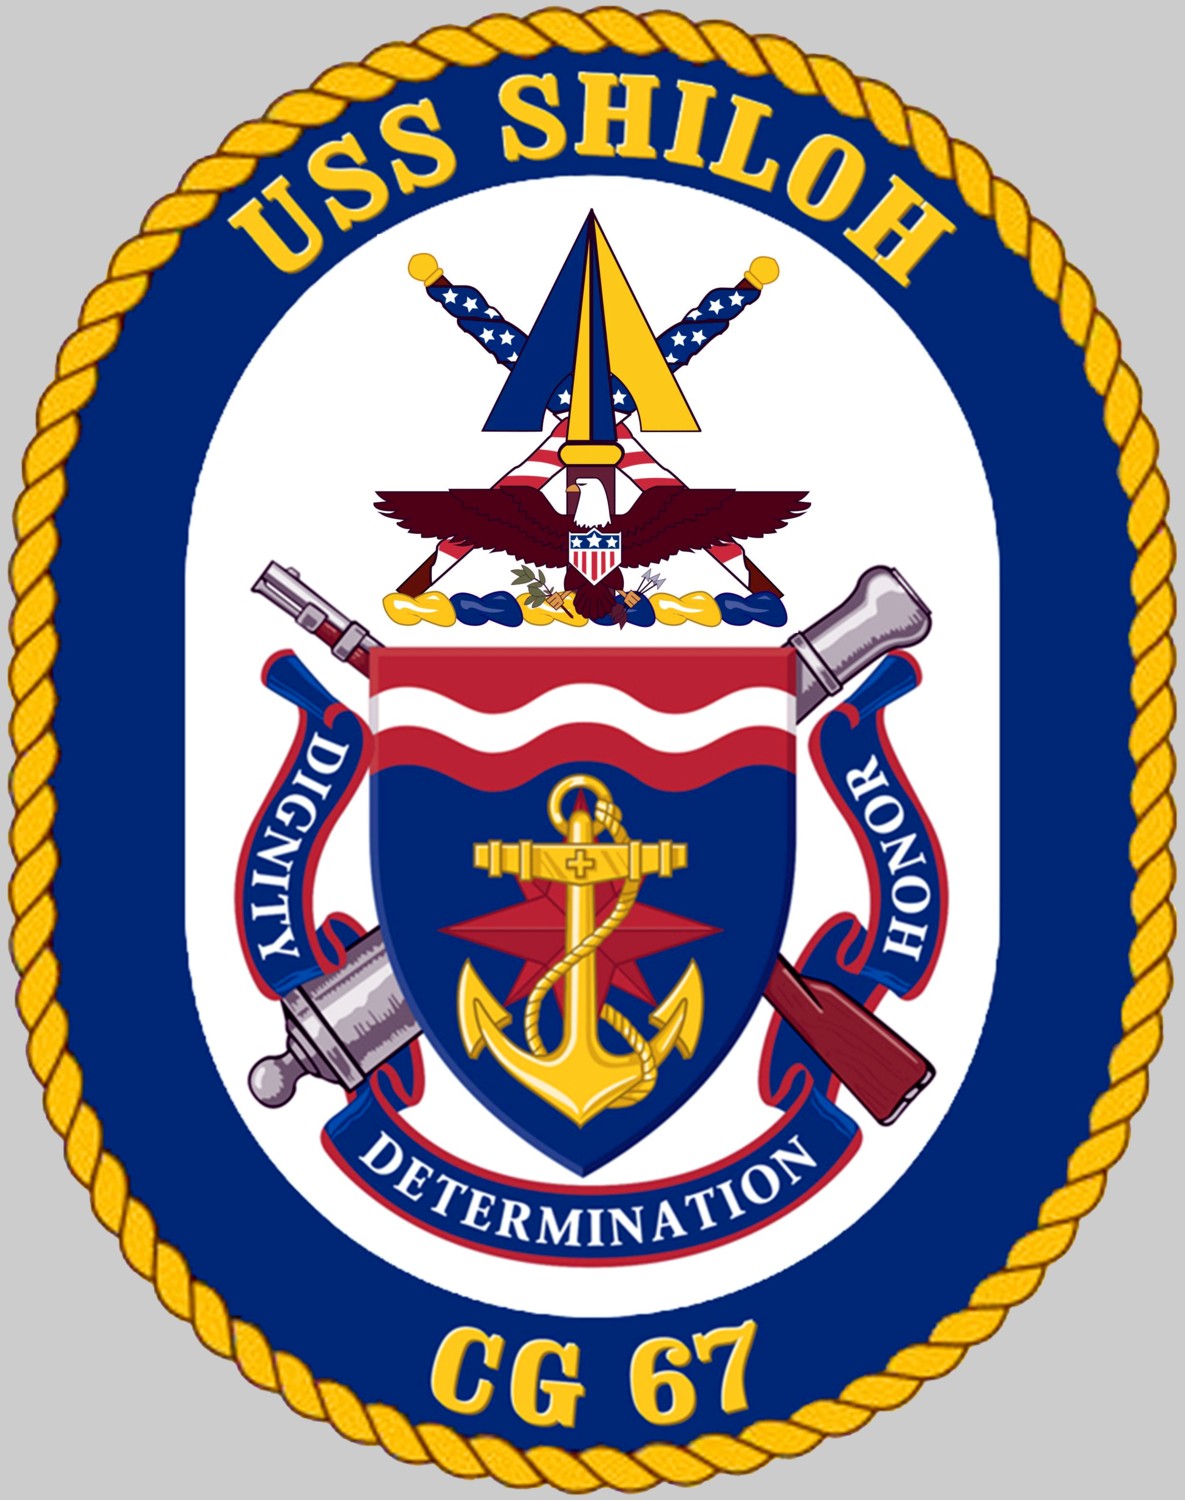 cg-67 uss shiloh insignia crest patch badge ticonderoga class guided missile cruiser aegis us navy 02c